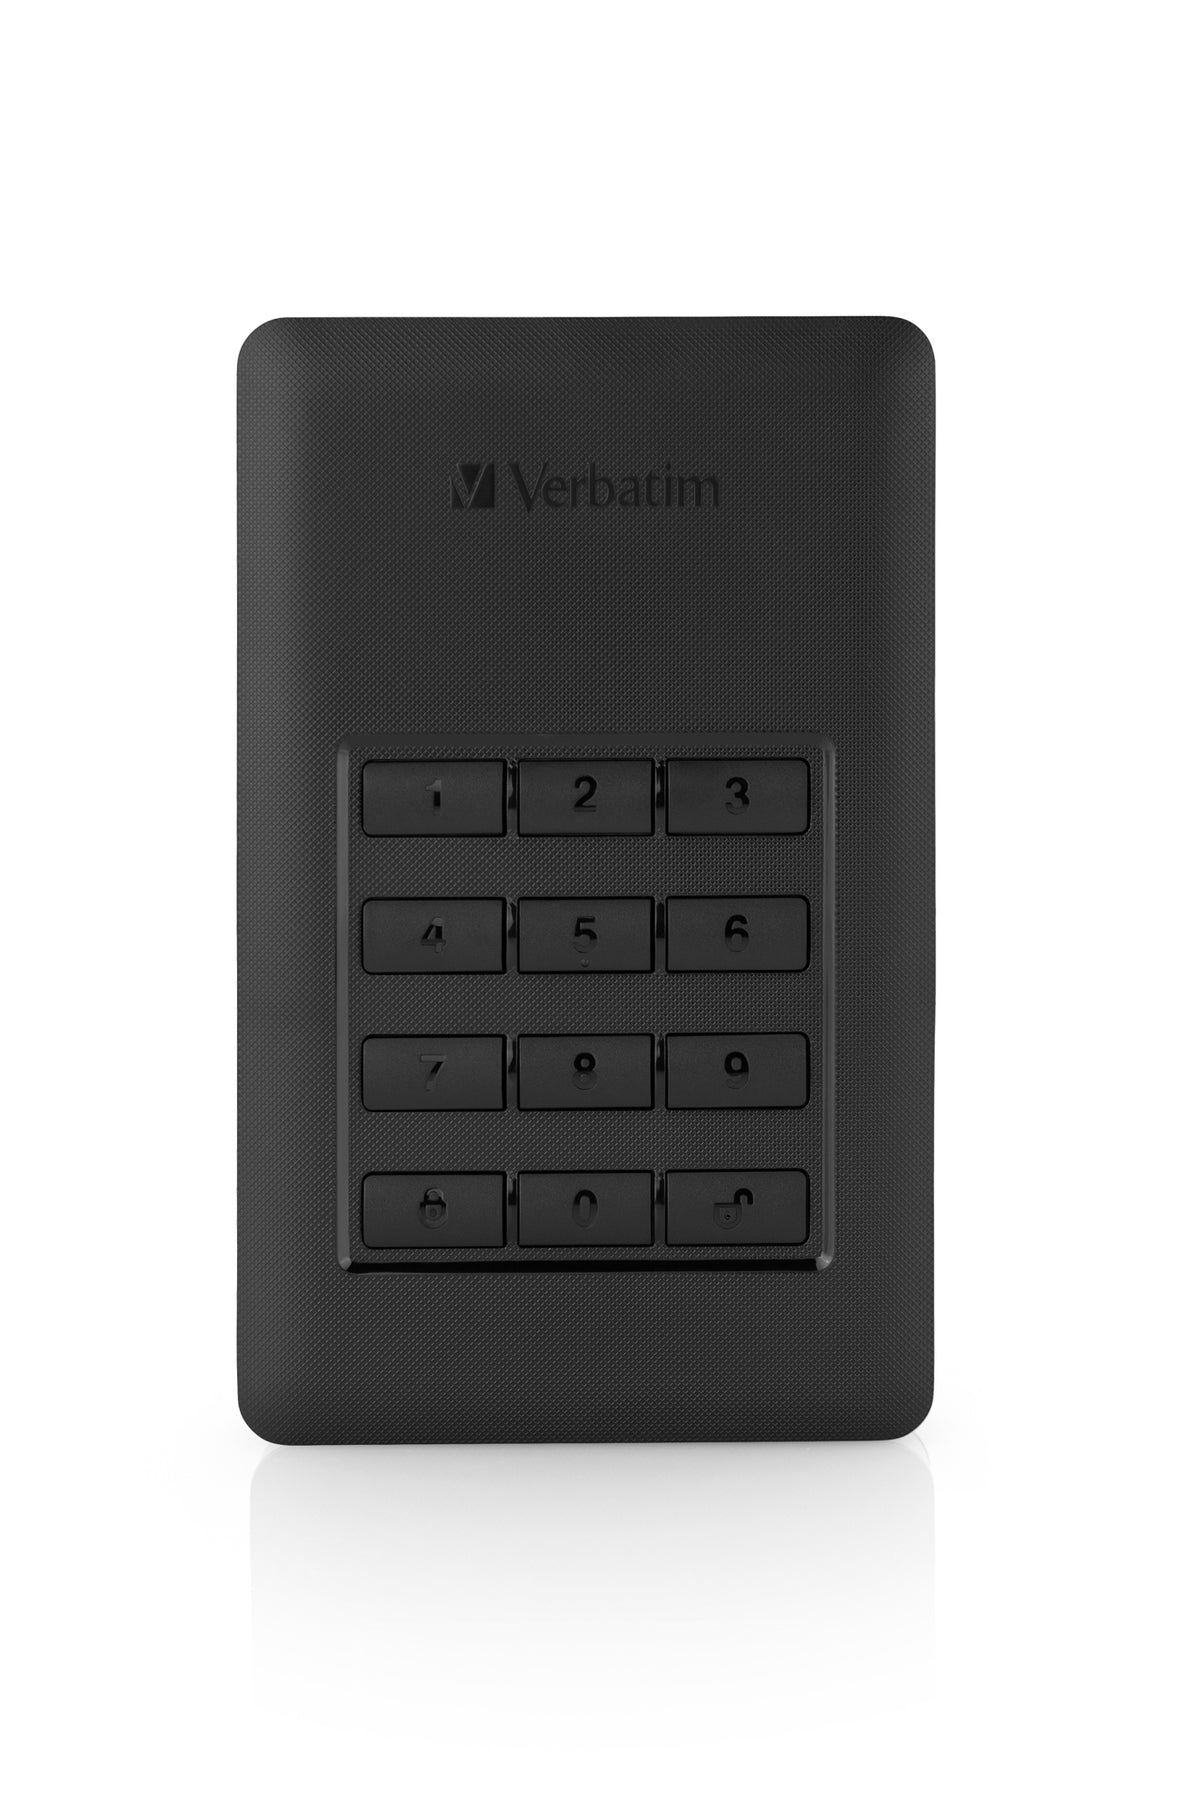 Verbatim External HDD Store 'n' Go  with Keypad Access 1TB